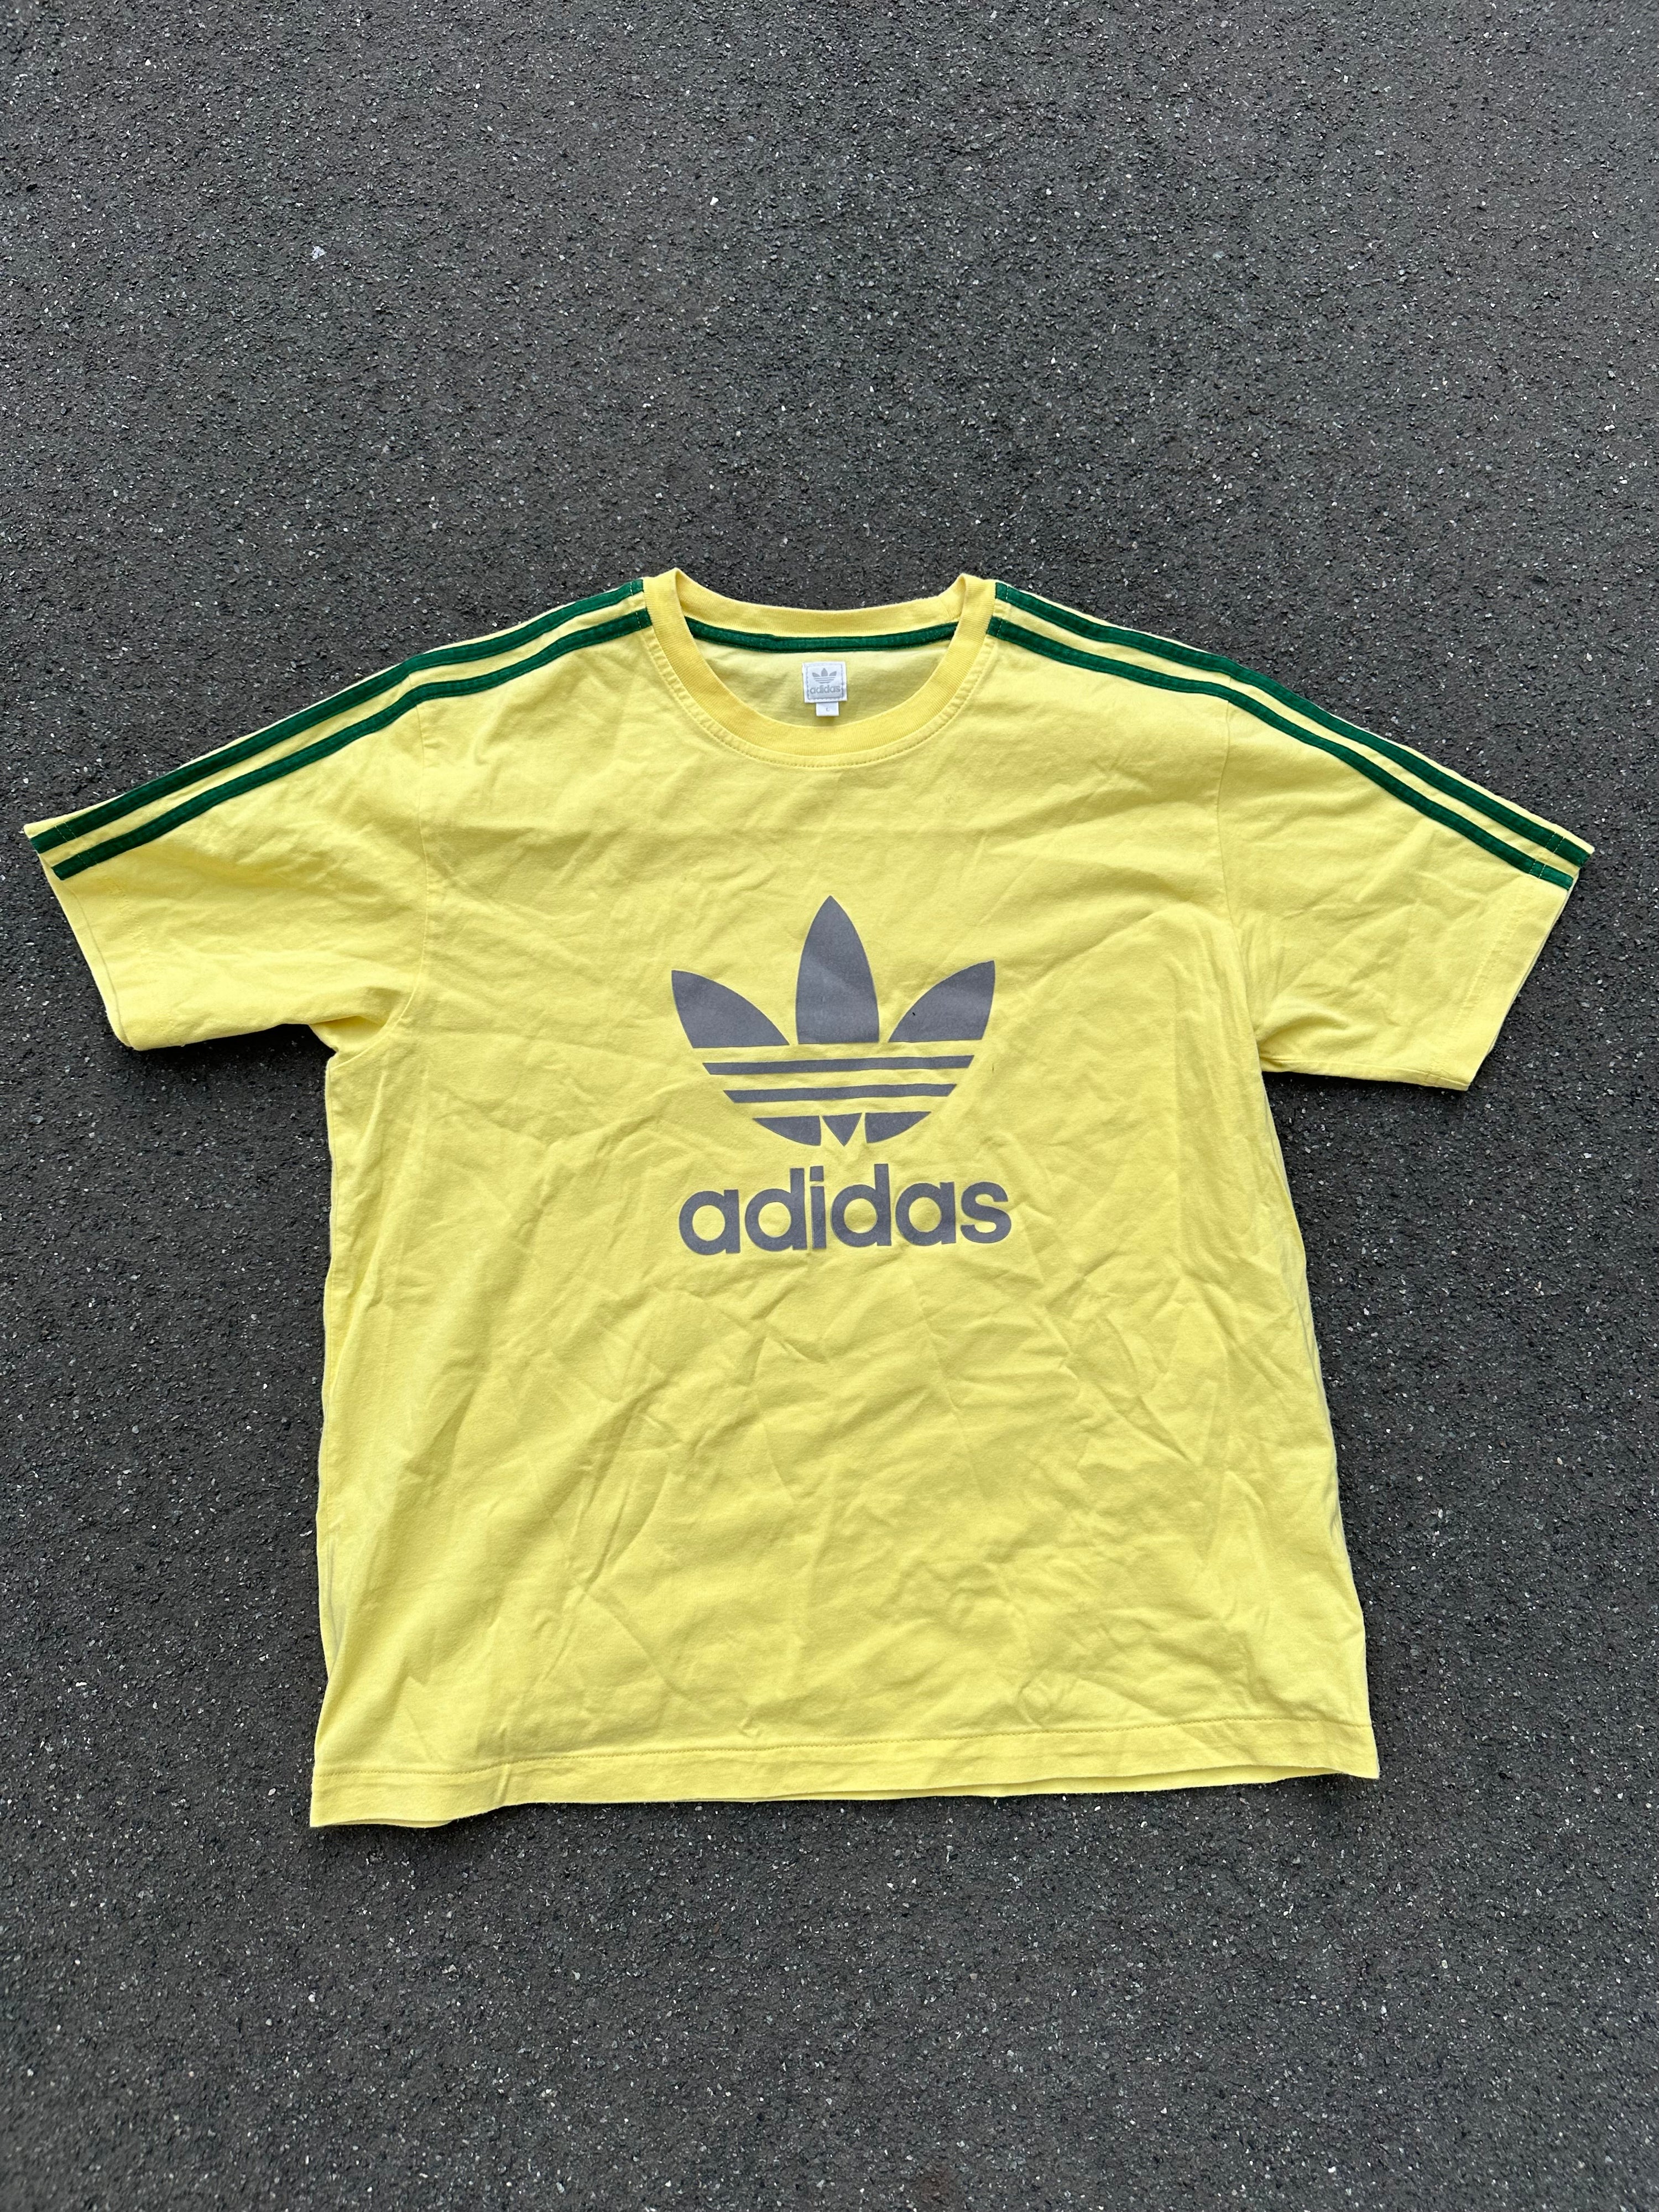 Adidas T-Shirt Gelb Grün (L)